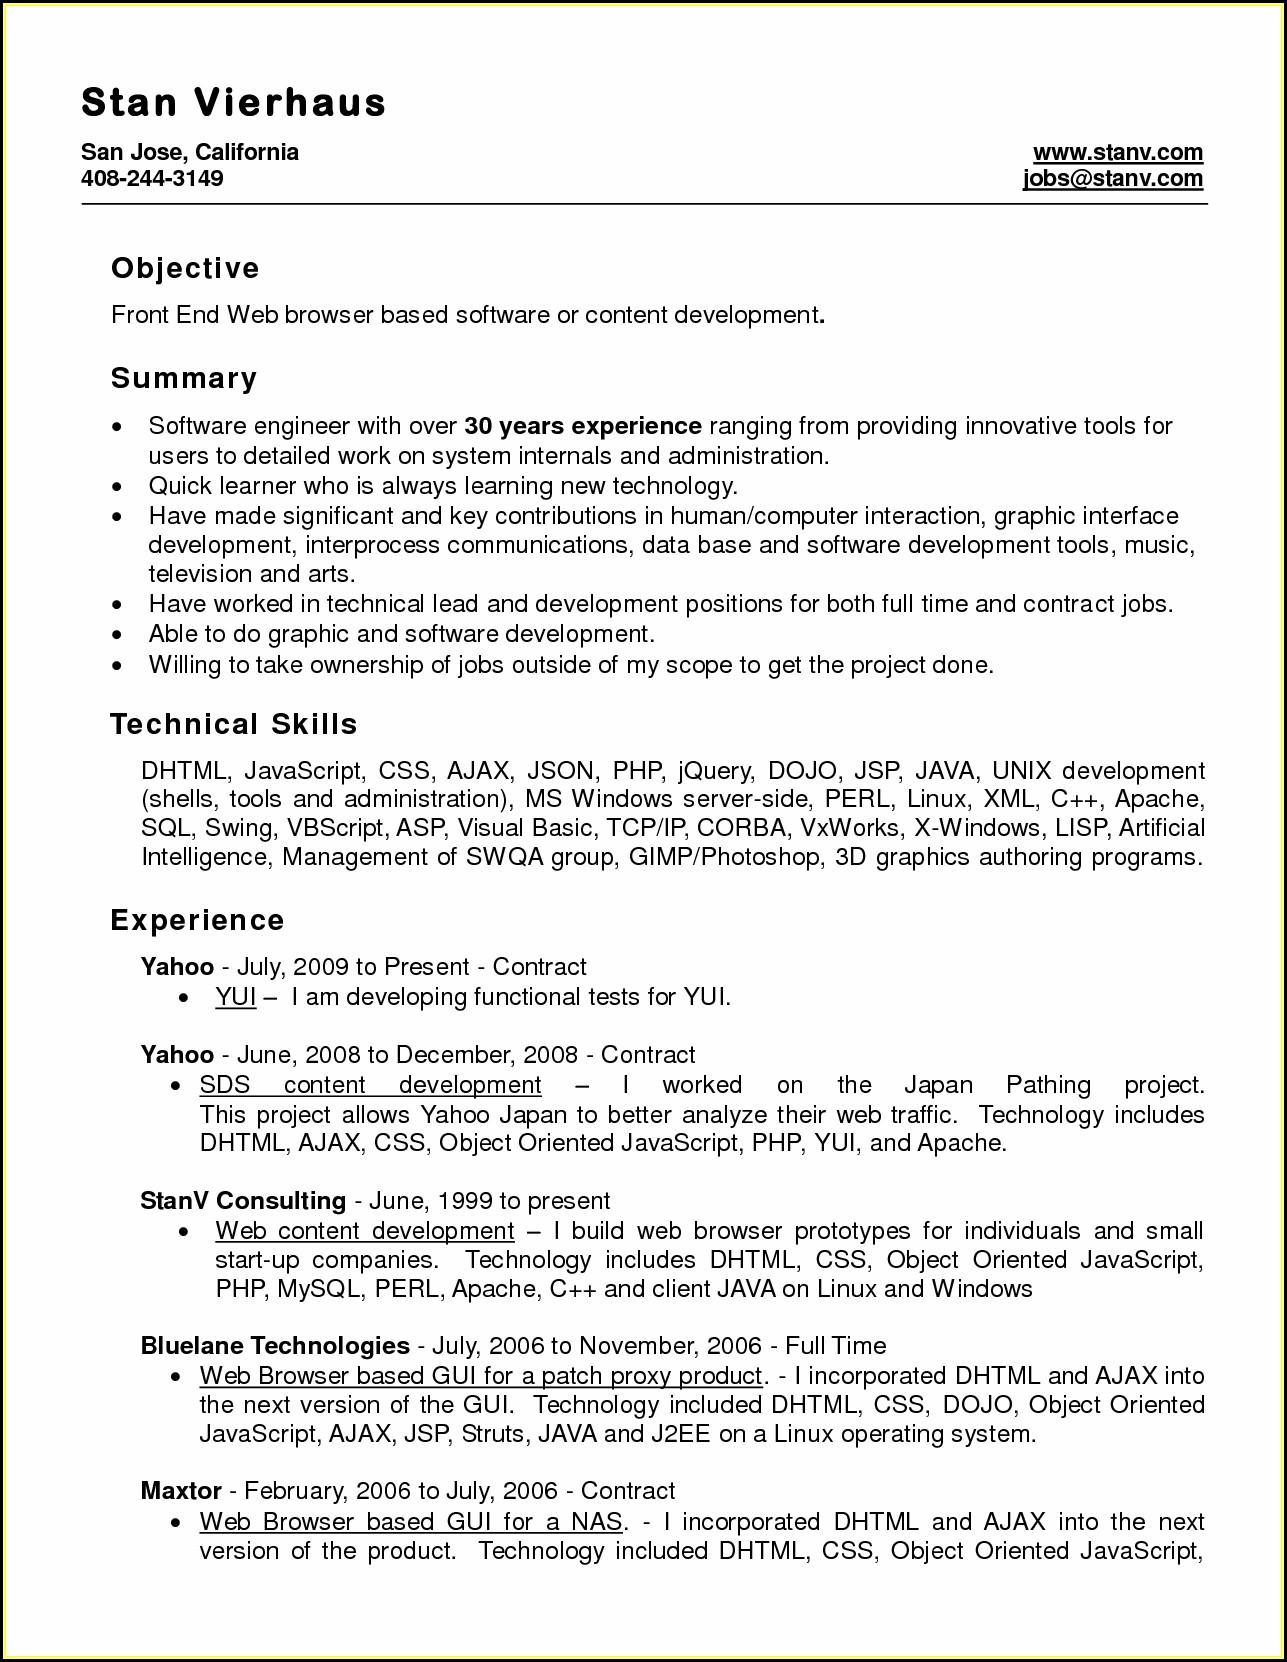 Resume Template Microsoft Word 2007